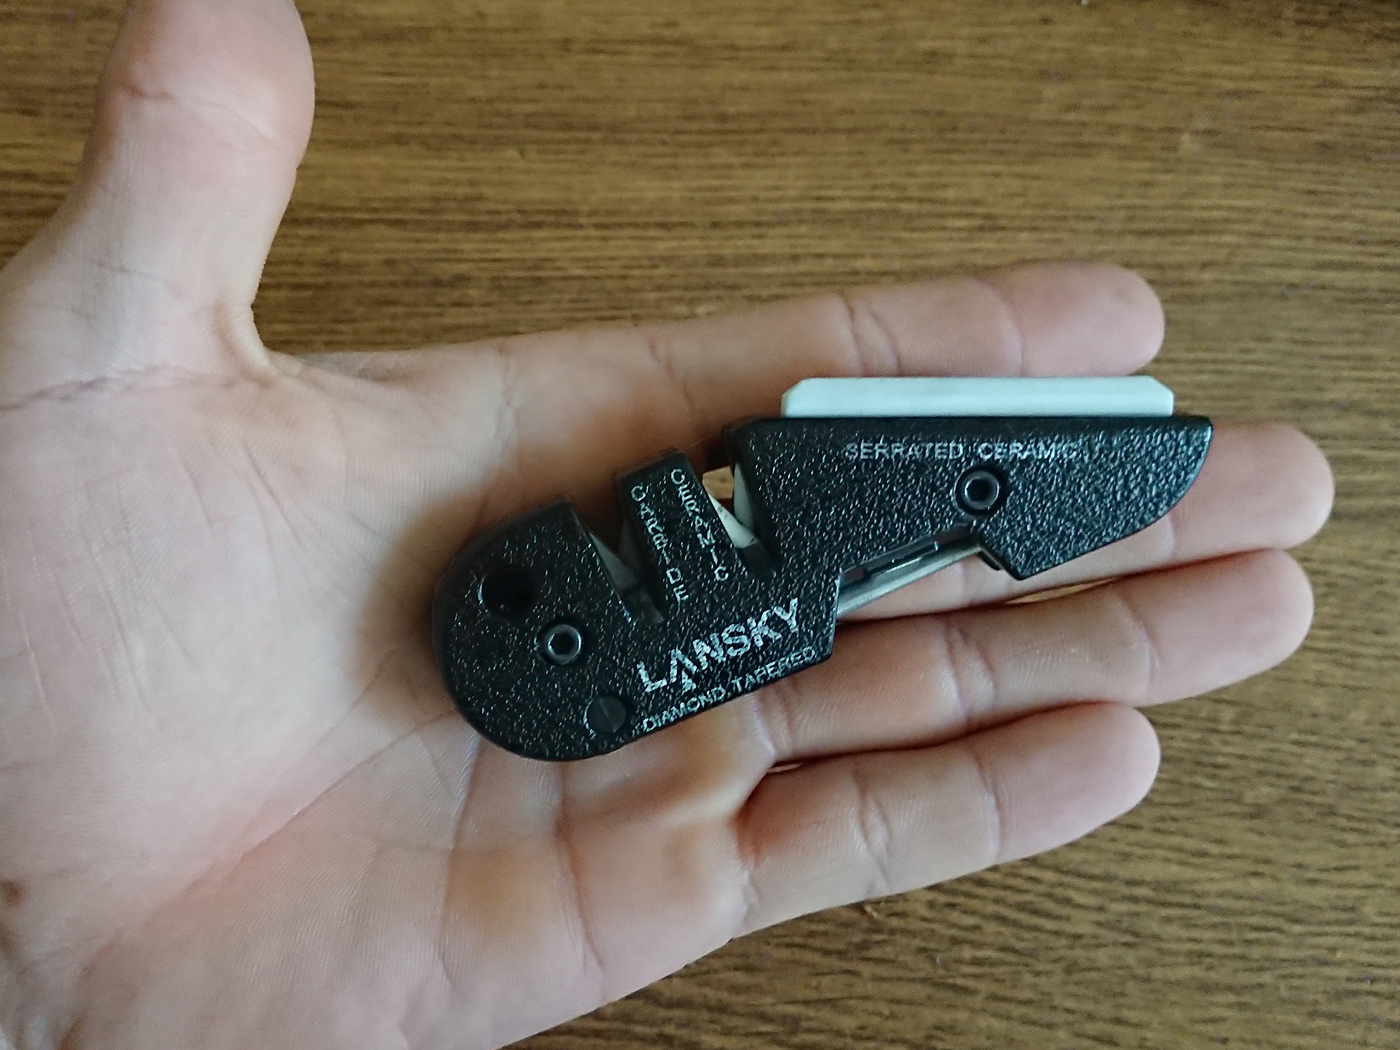 Lansky Blademedic Pocket Sharpener PS-MED01